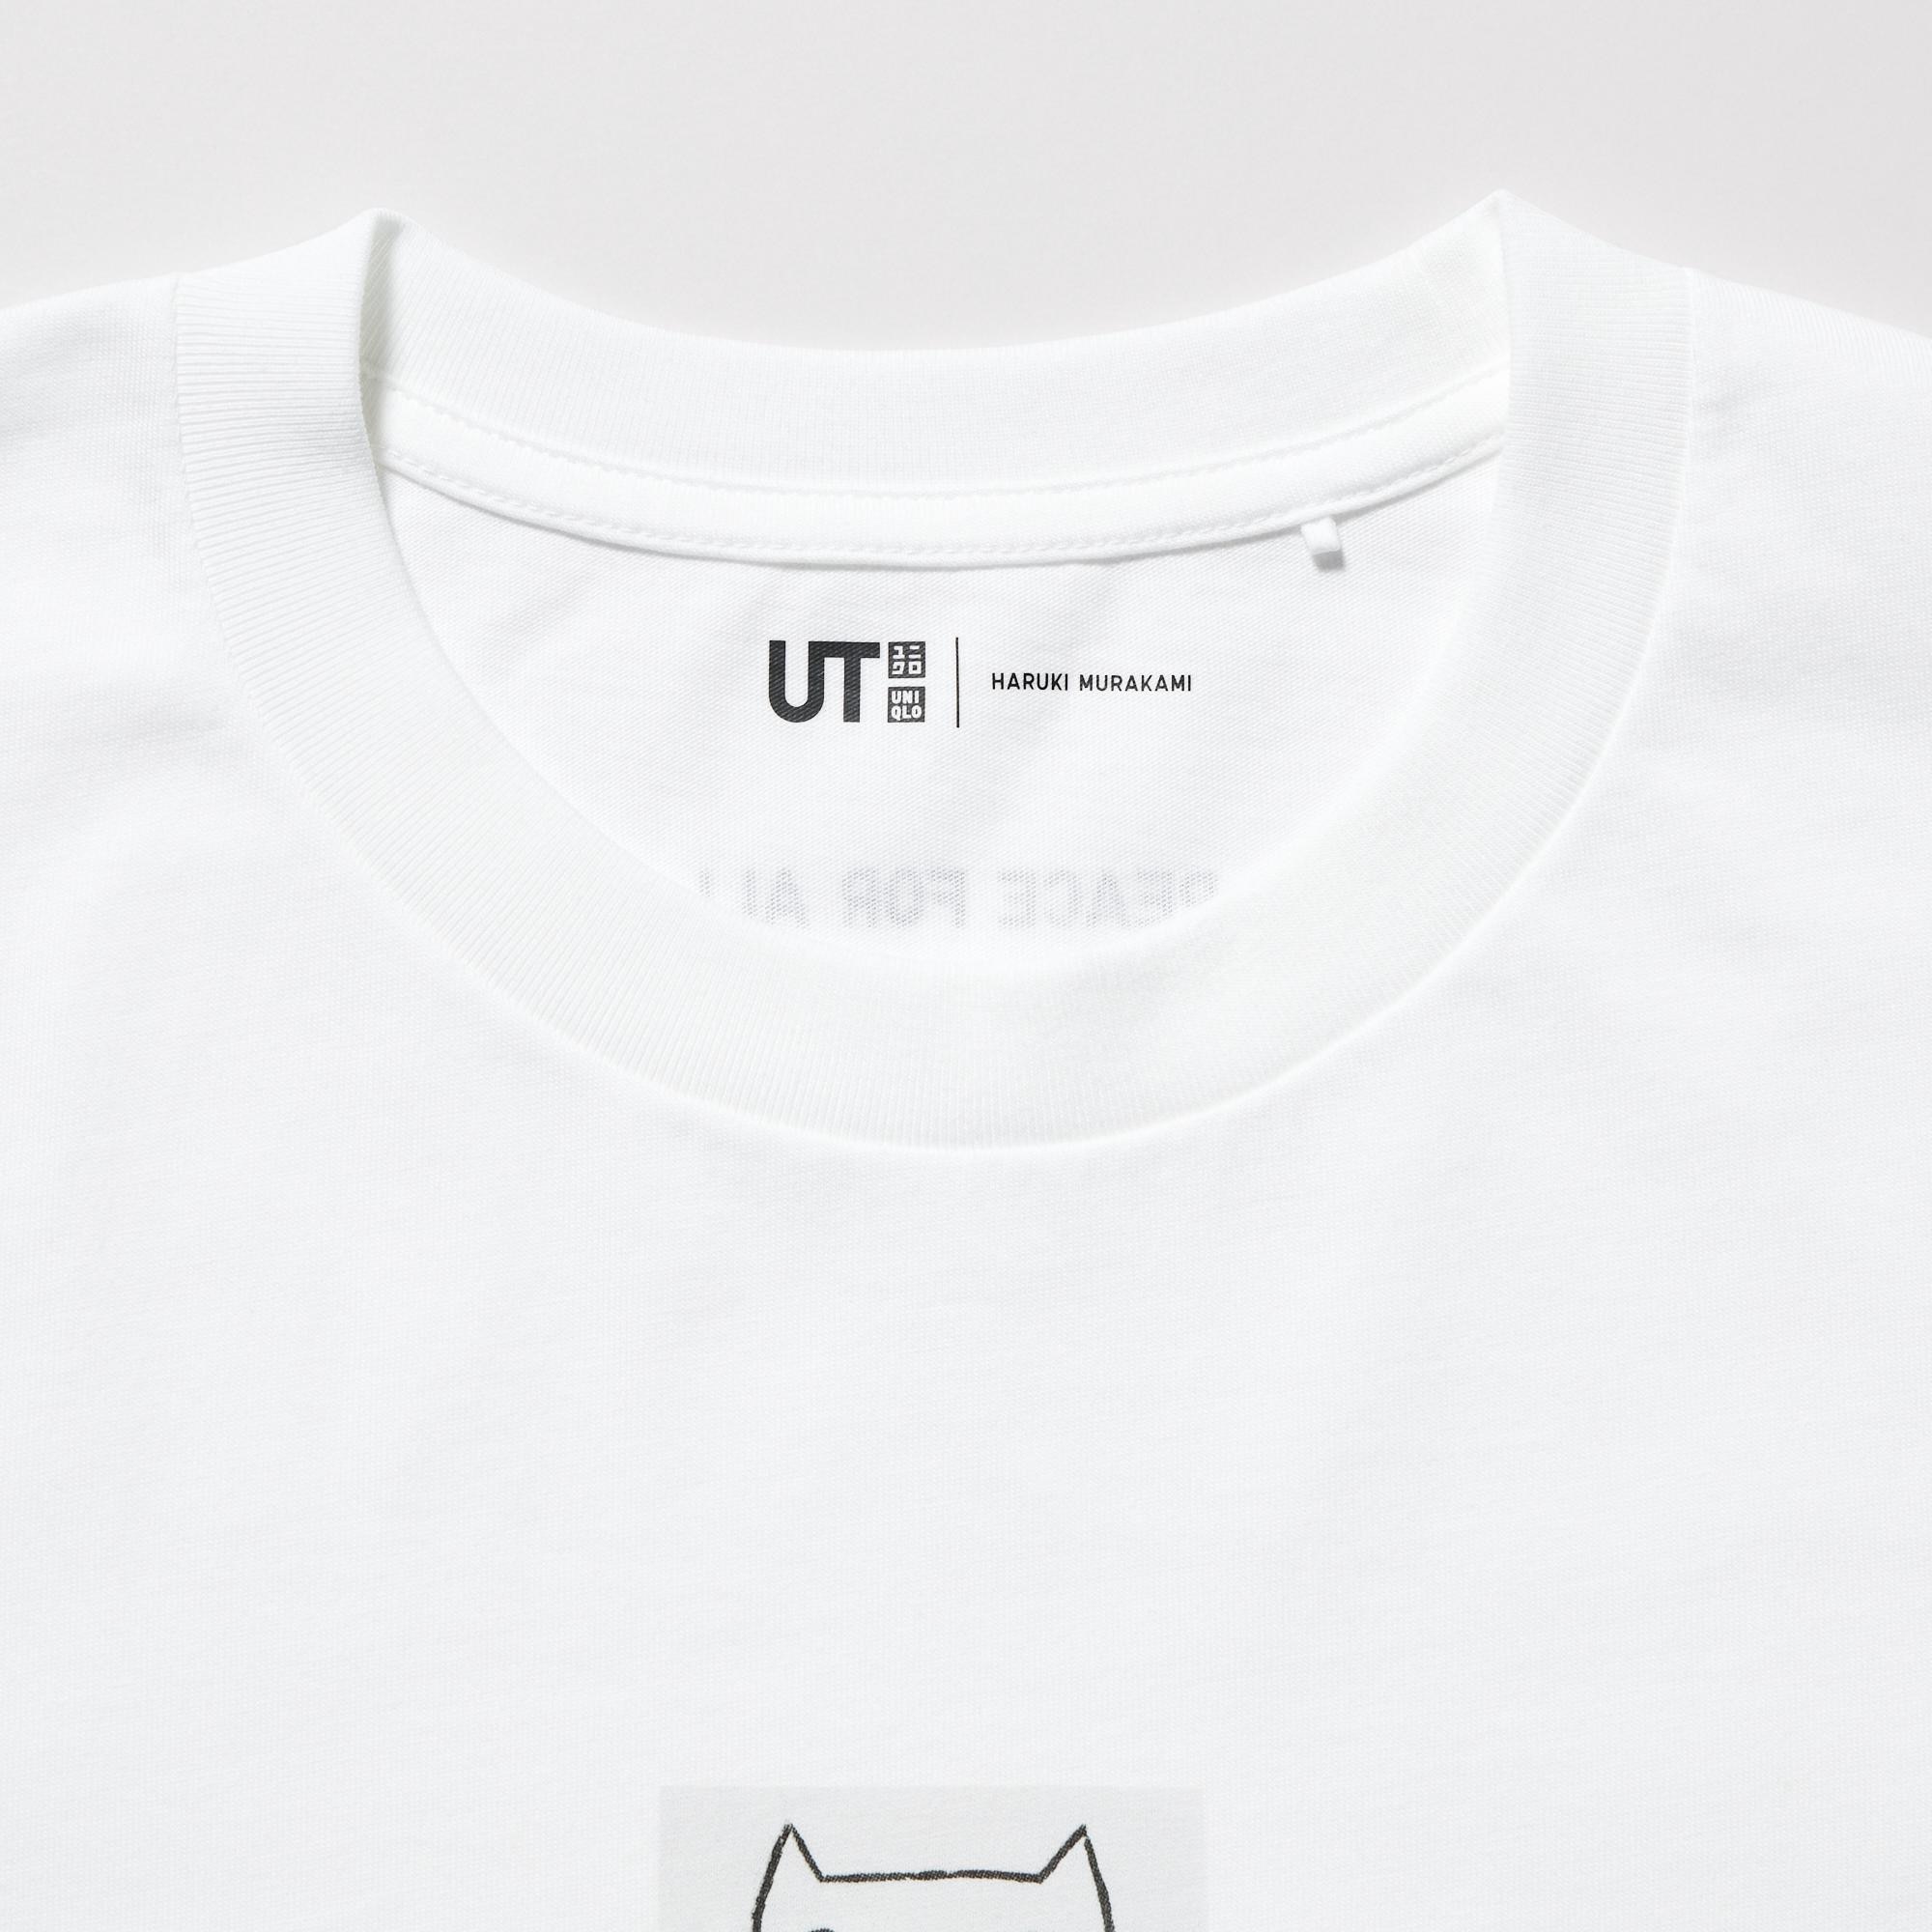 Haruki Murakami has designed a Haruki Murakamithemed Tshirt collection  for UNIQLO  Literary Hub